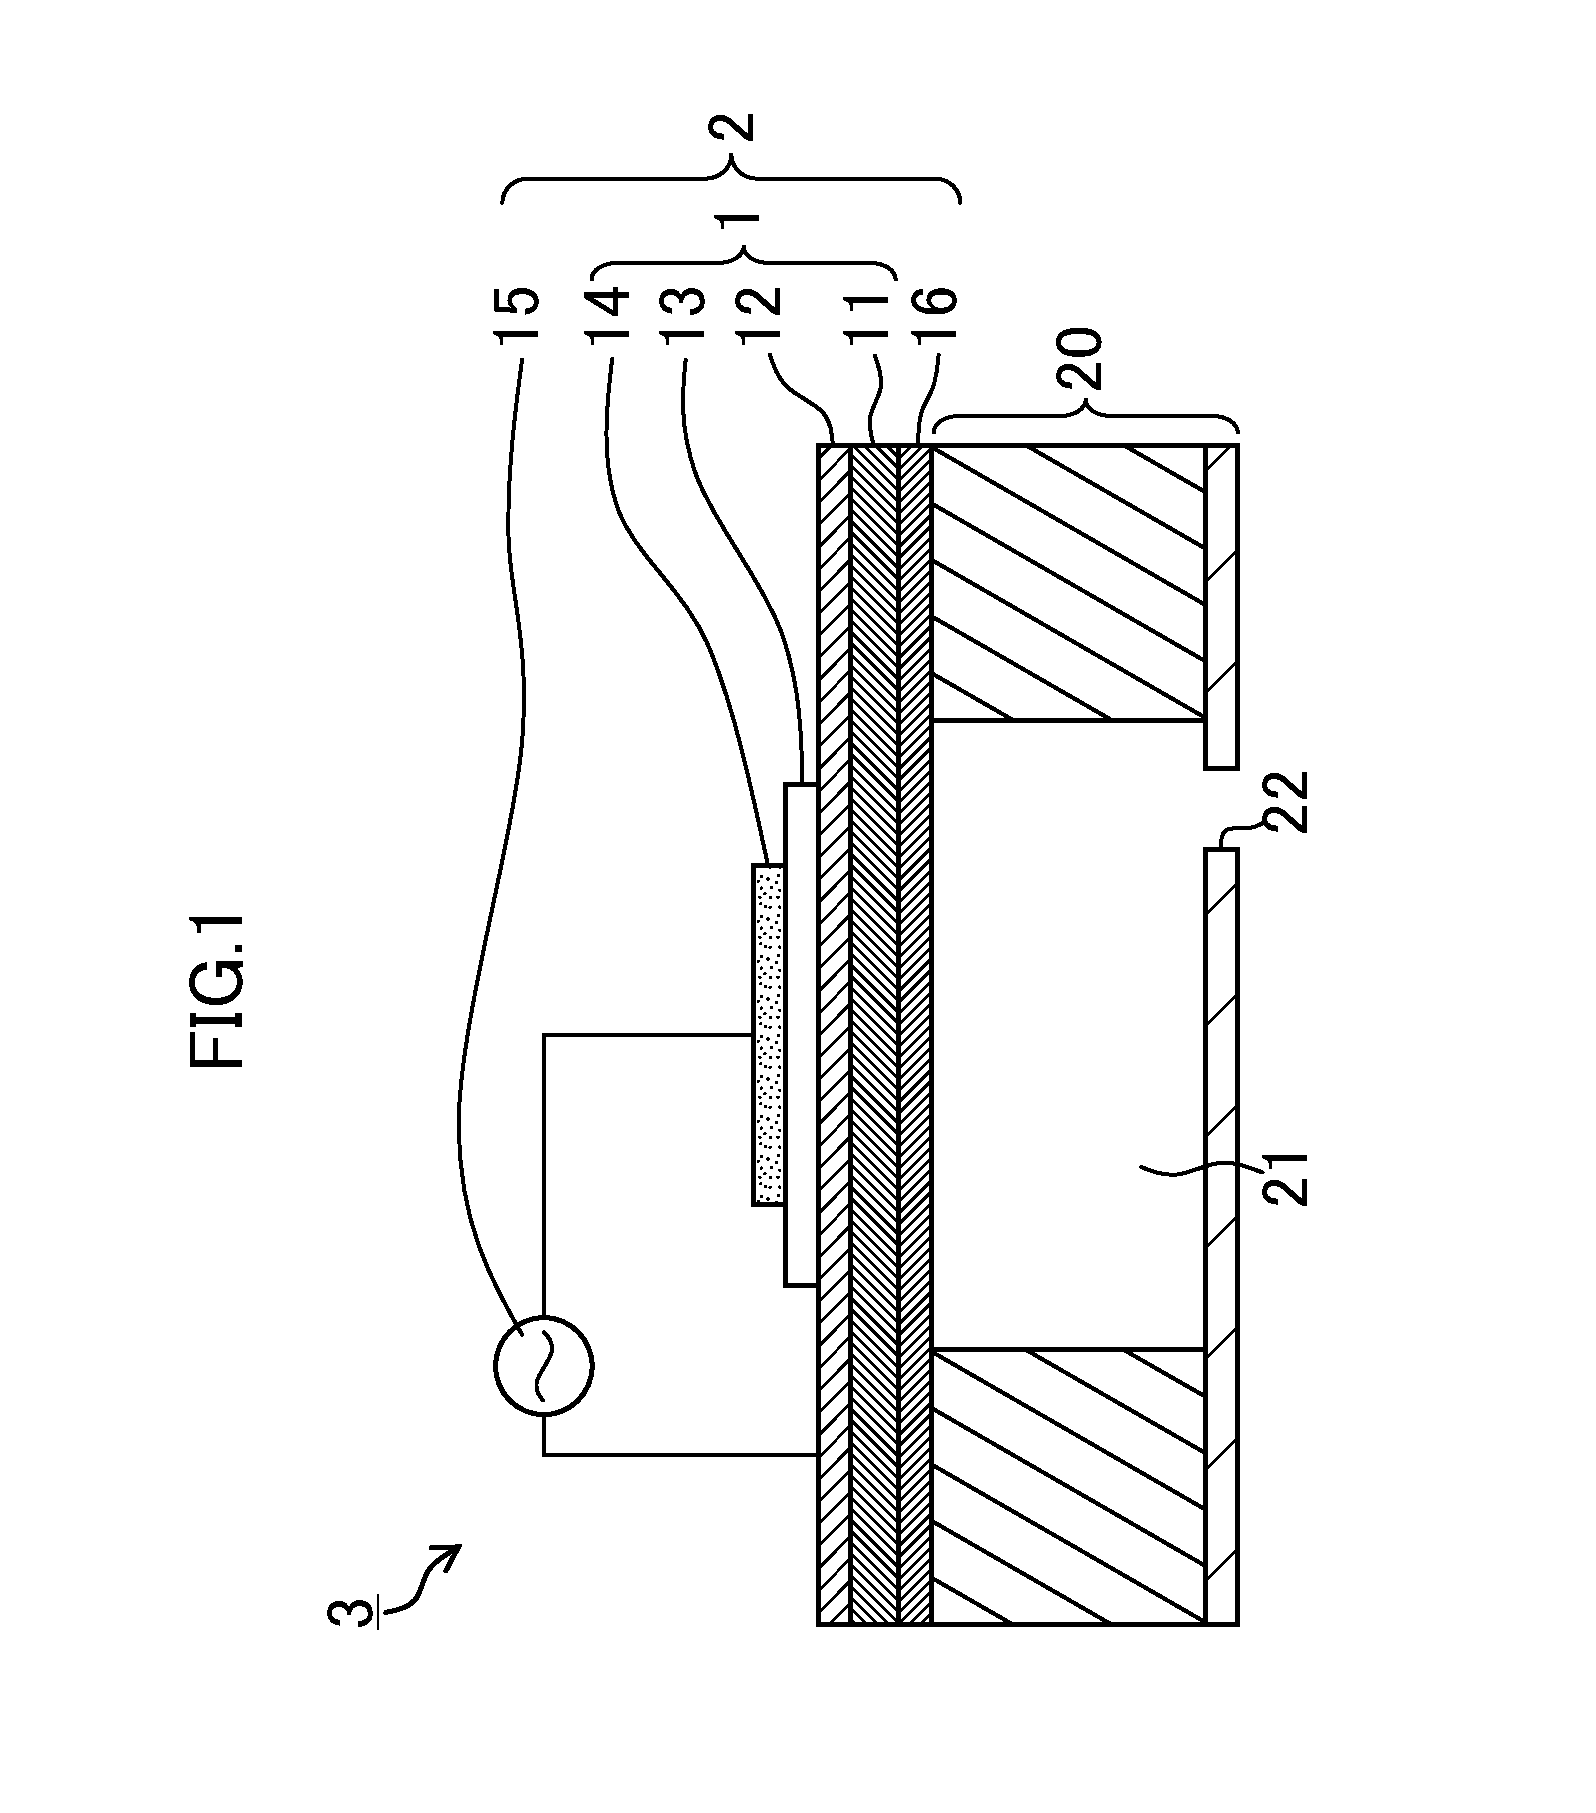 Piezoelectric film, piezoelectric device, liquid ejection apparatus, and method of producing piezoelectric film